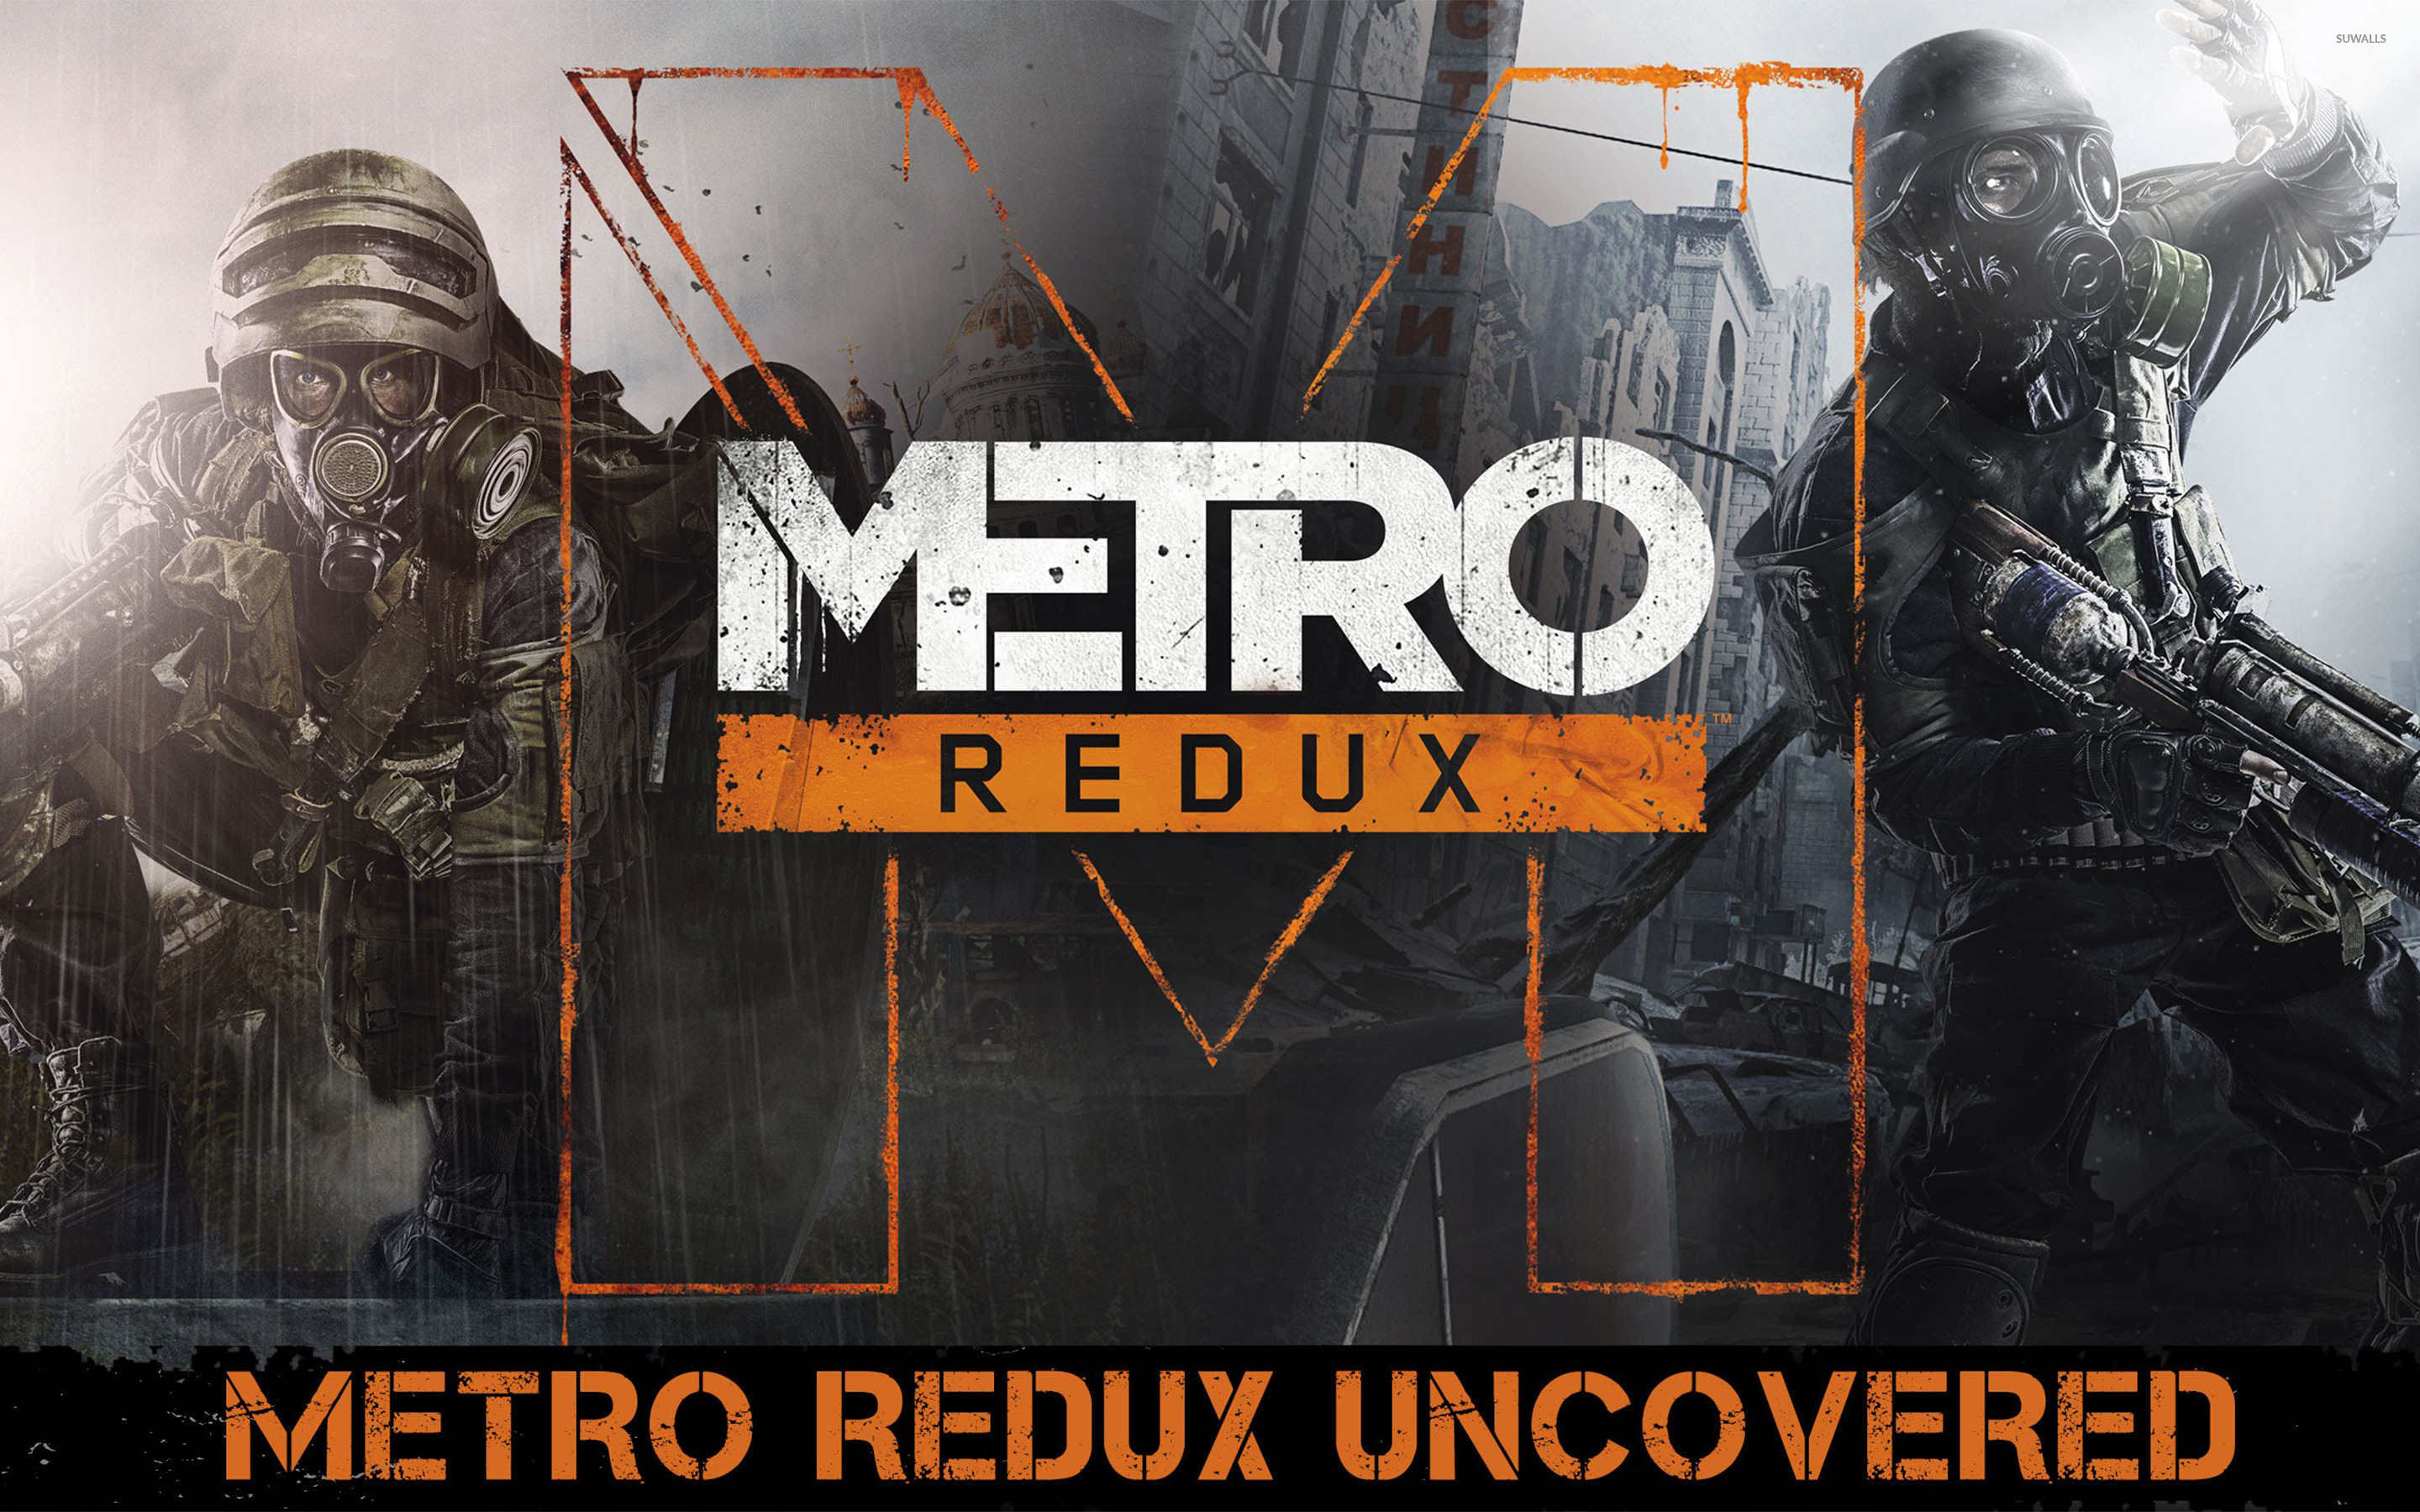 Redux games. Metro 2033 Redux. Метро 2033 редуксобложка. Metro 2033 Redux обложка. Игра метро ласт Лайт.